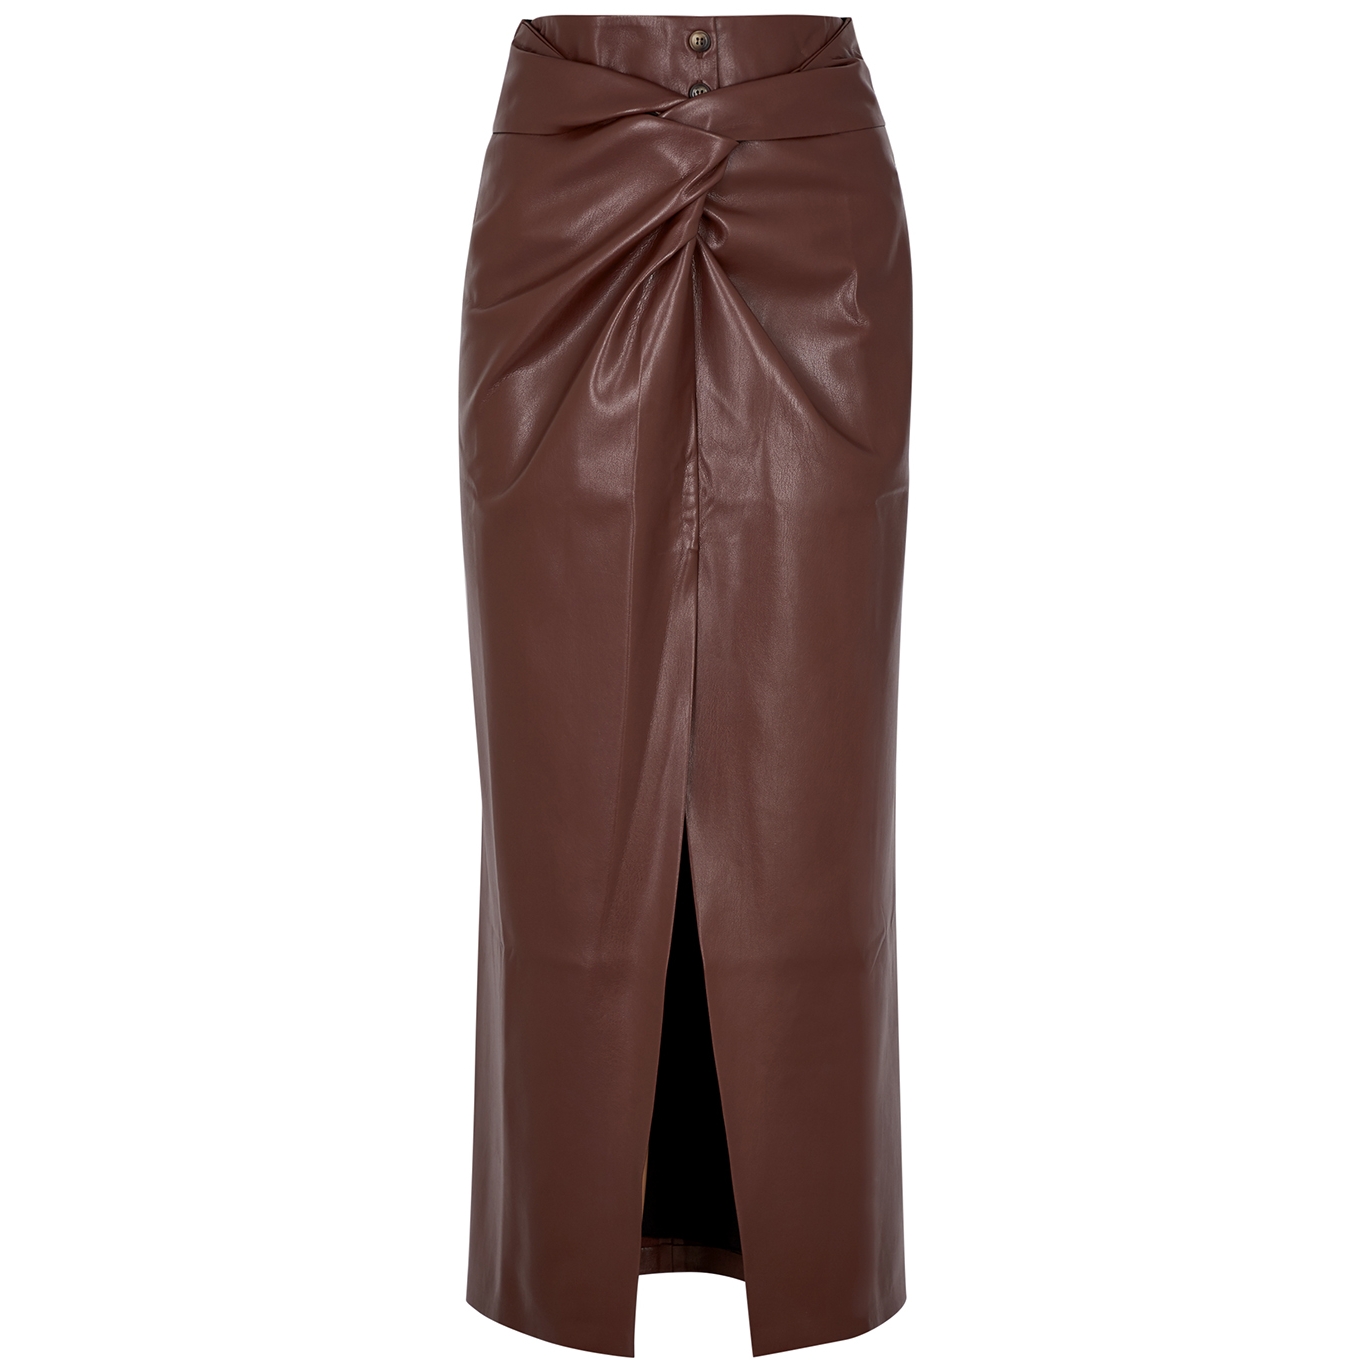 Nanushka Leane Brown Faux Leather Skirt - L